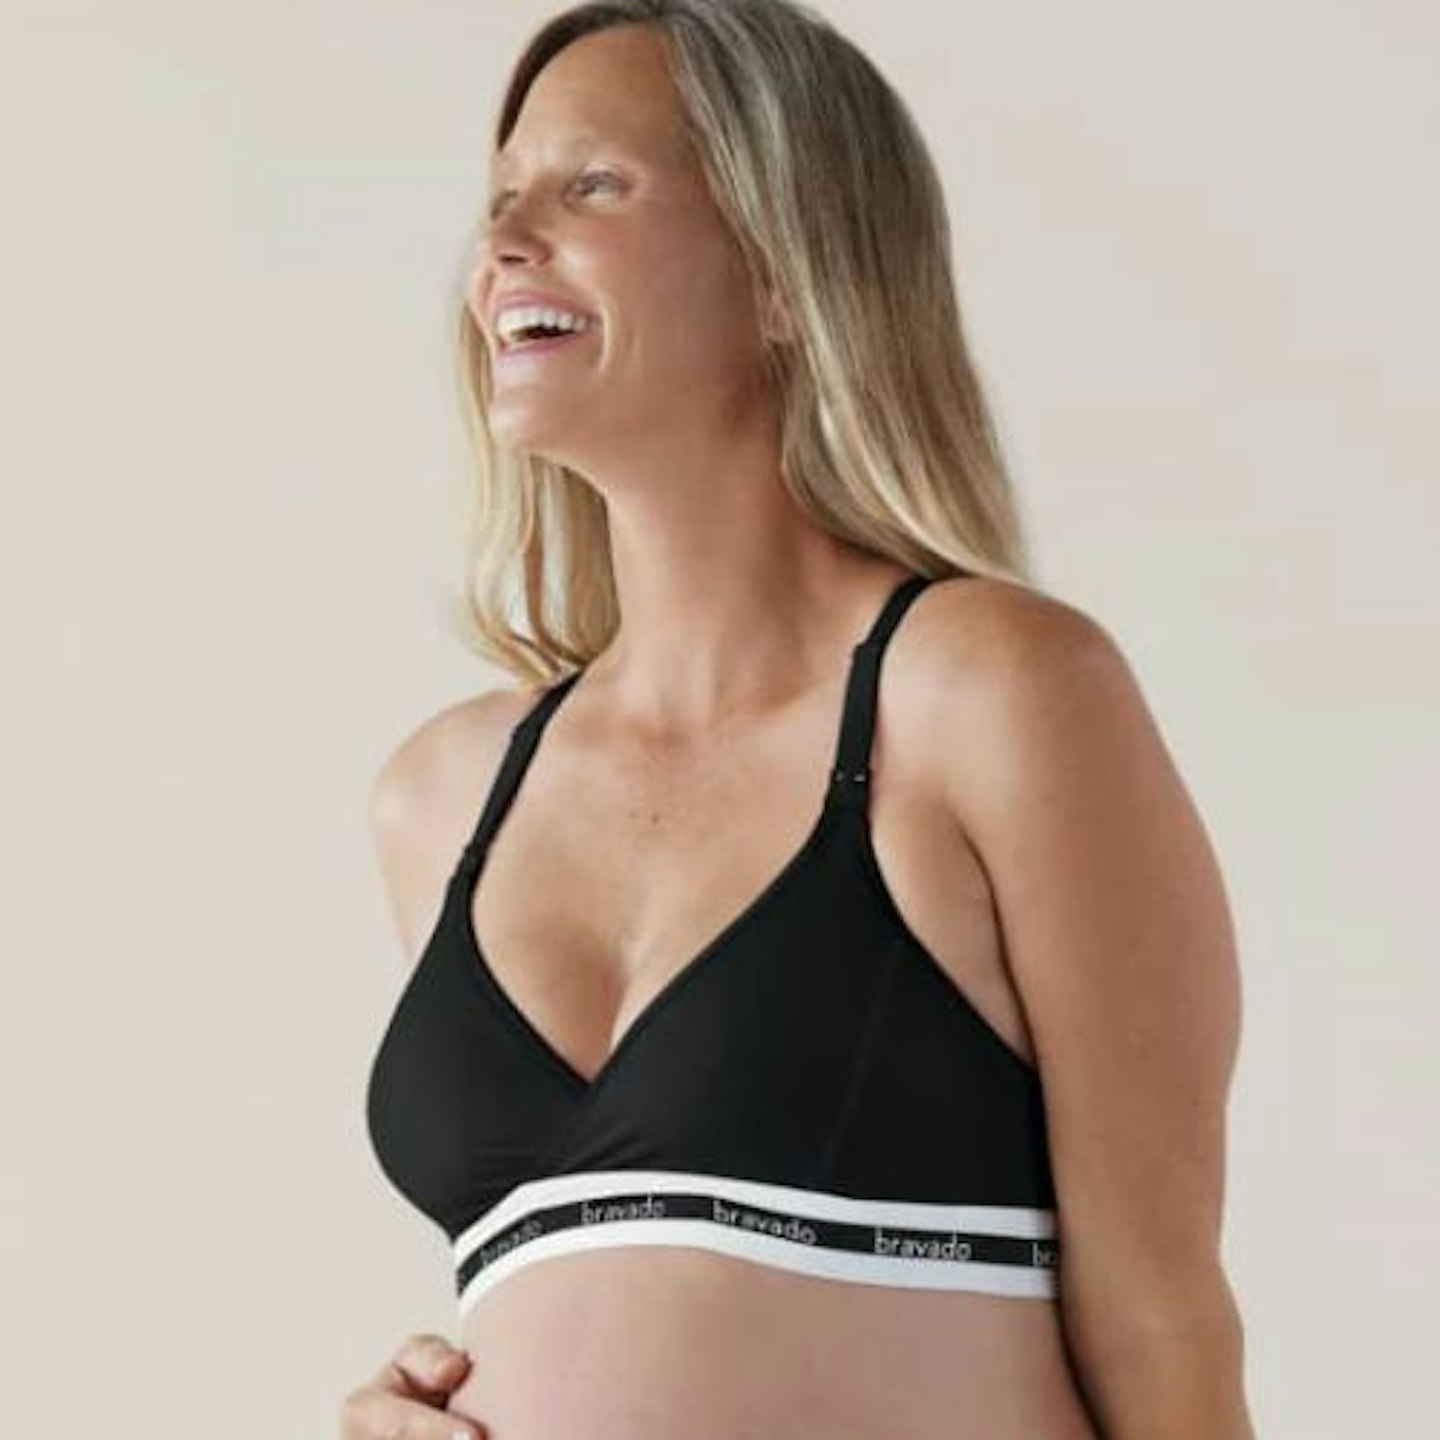  Bravado Designs Maternity & Nursing Bra Seamless Double Layer,  Wirefree, Adjustable for Breastfeeding, Black